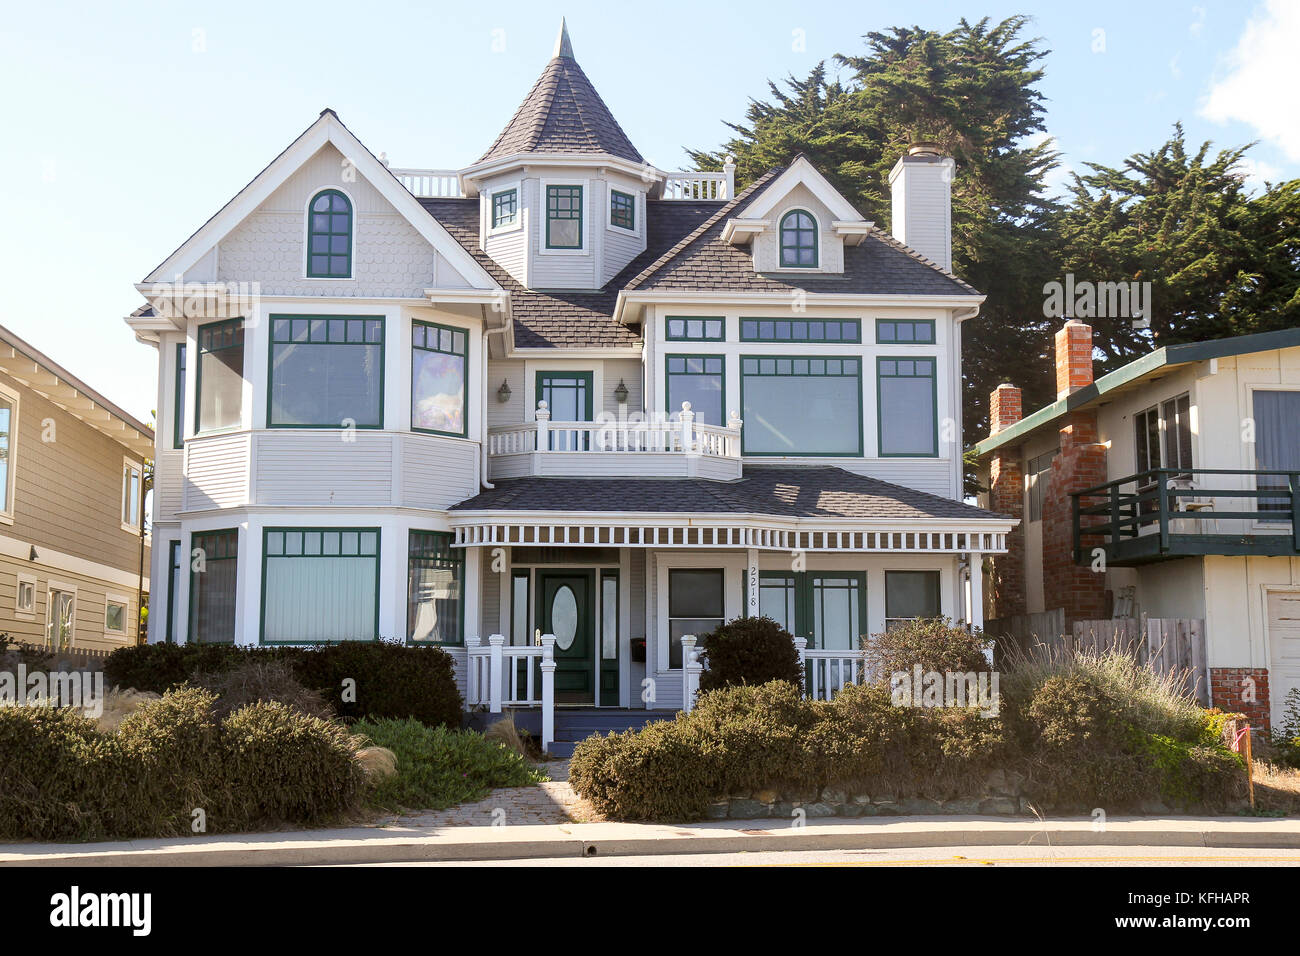 A home in Santa Cruz, California, United States Stock Photo